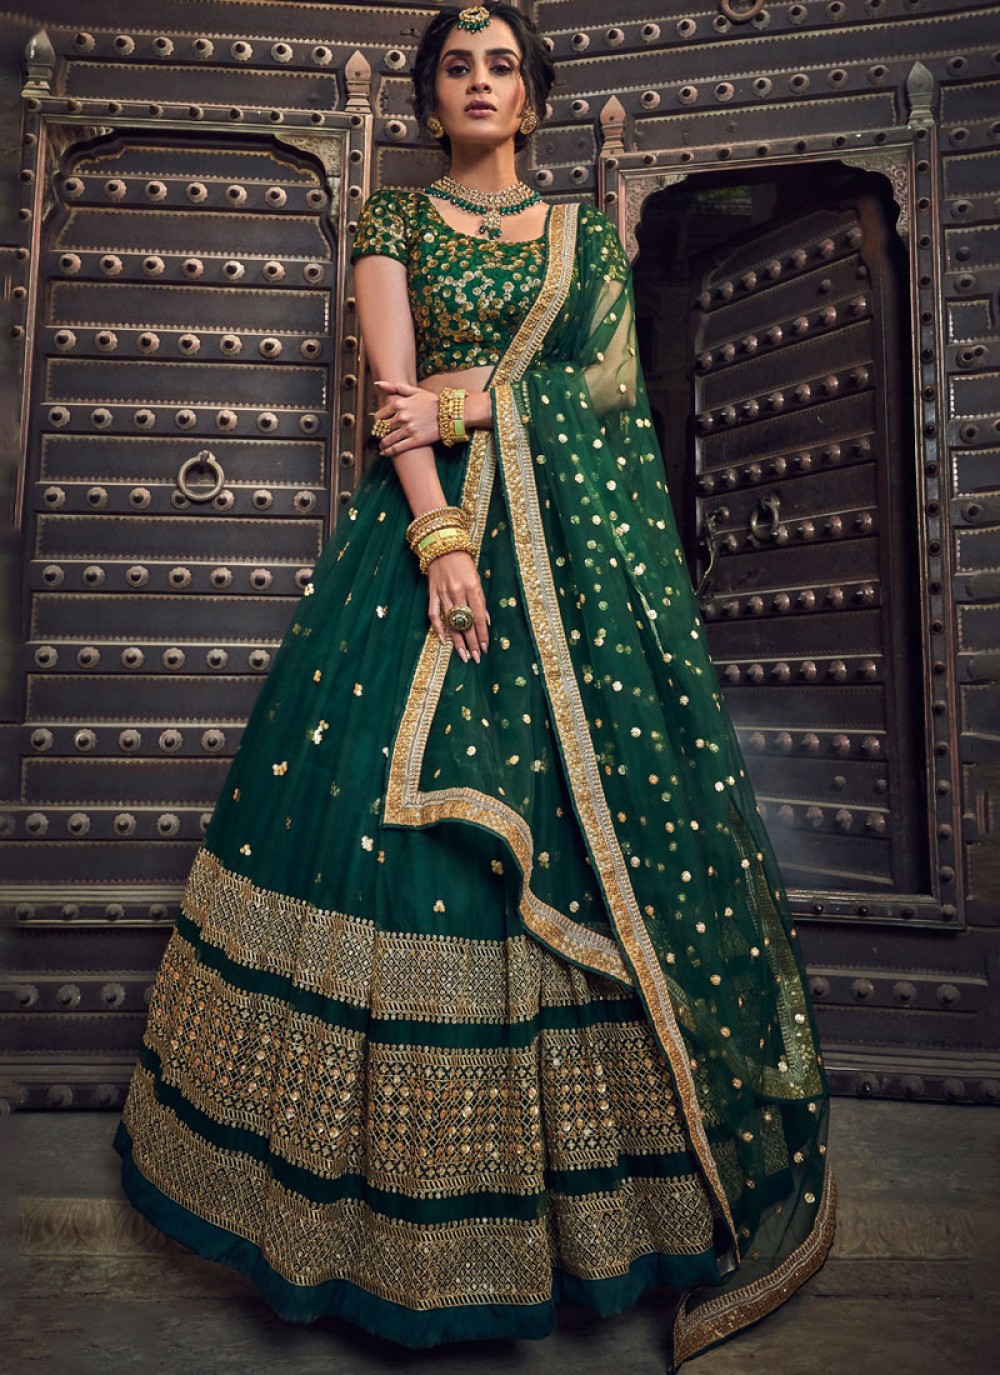 Beautiful Green Lehenga Designs For Every Kind Of Bride - K4 Fashion